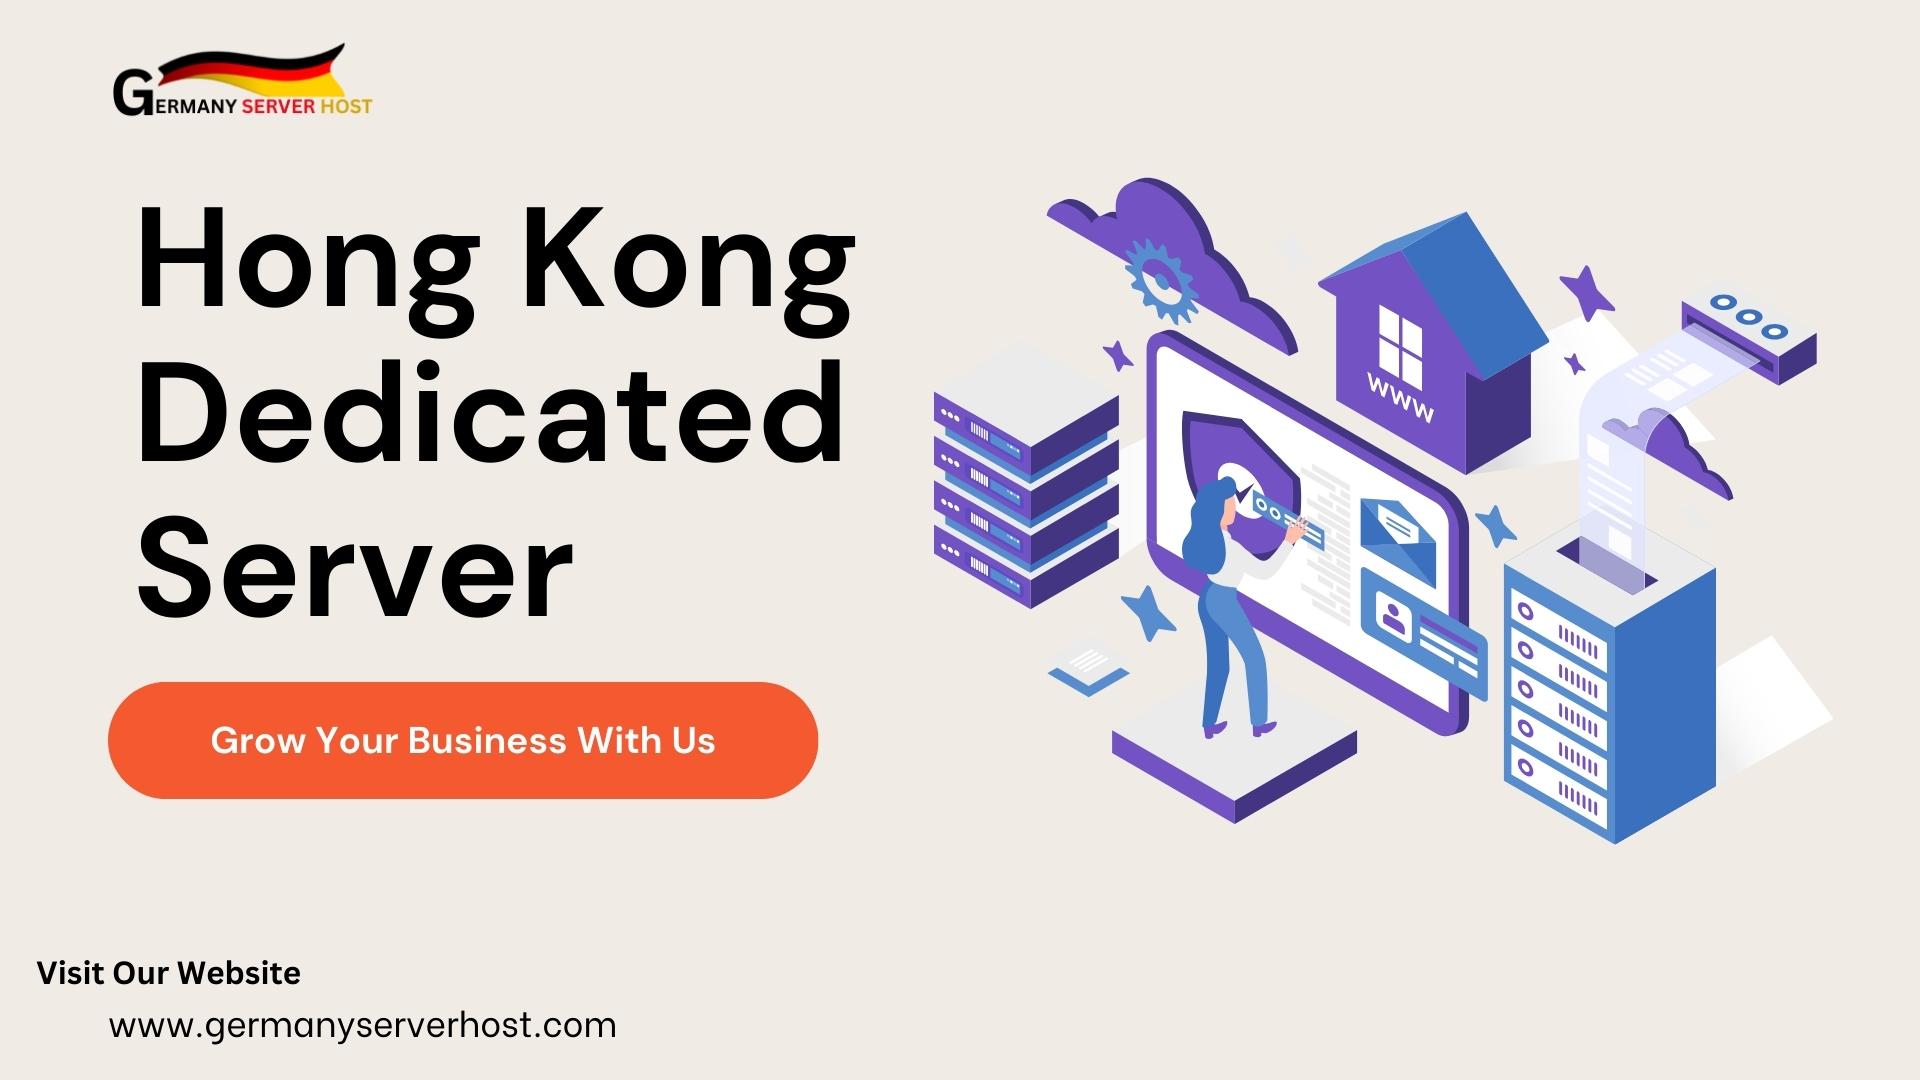 Hong Kong Server